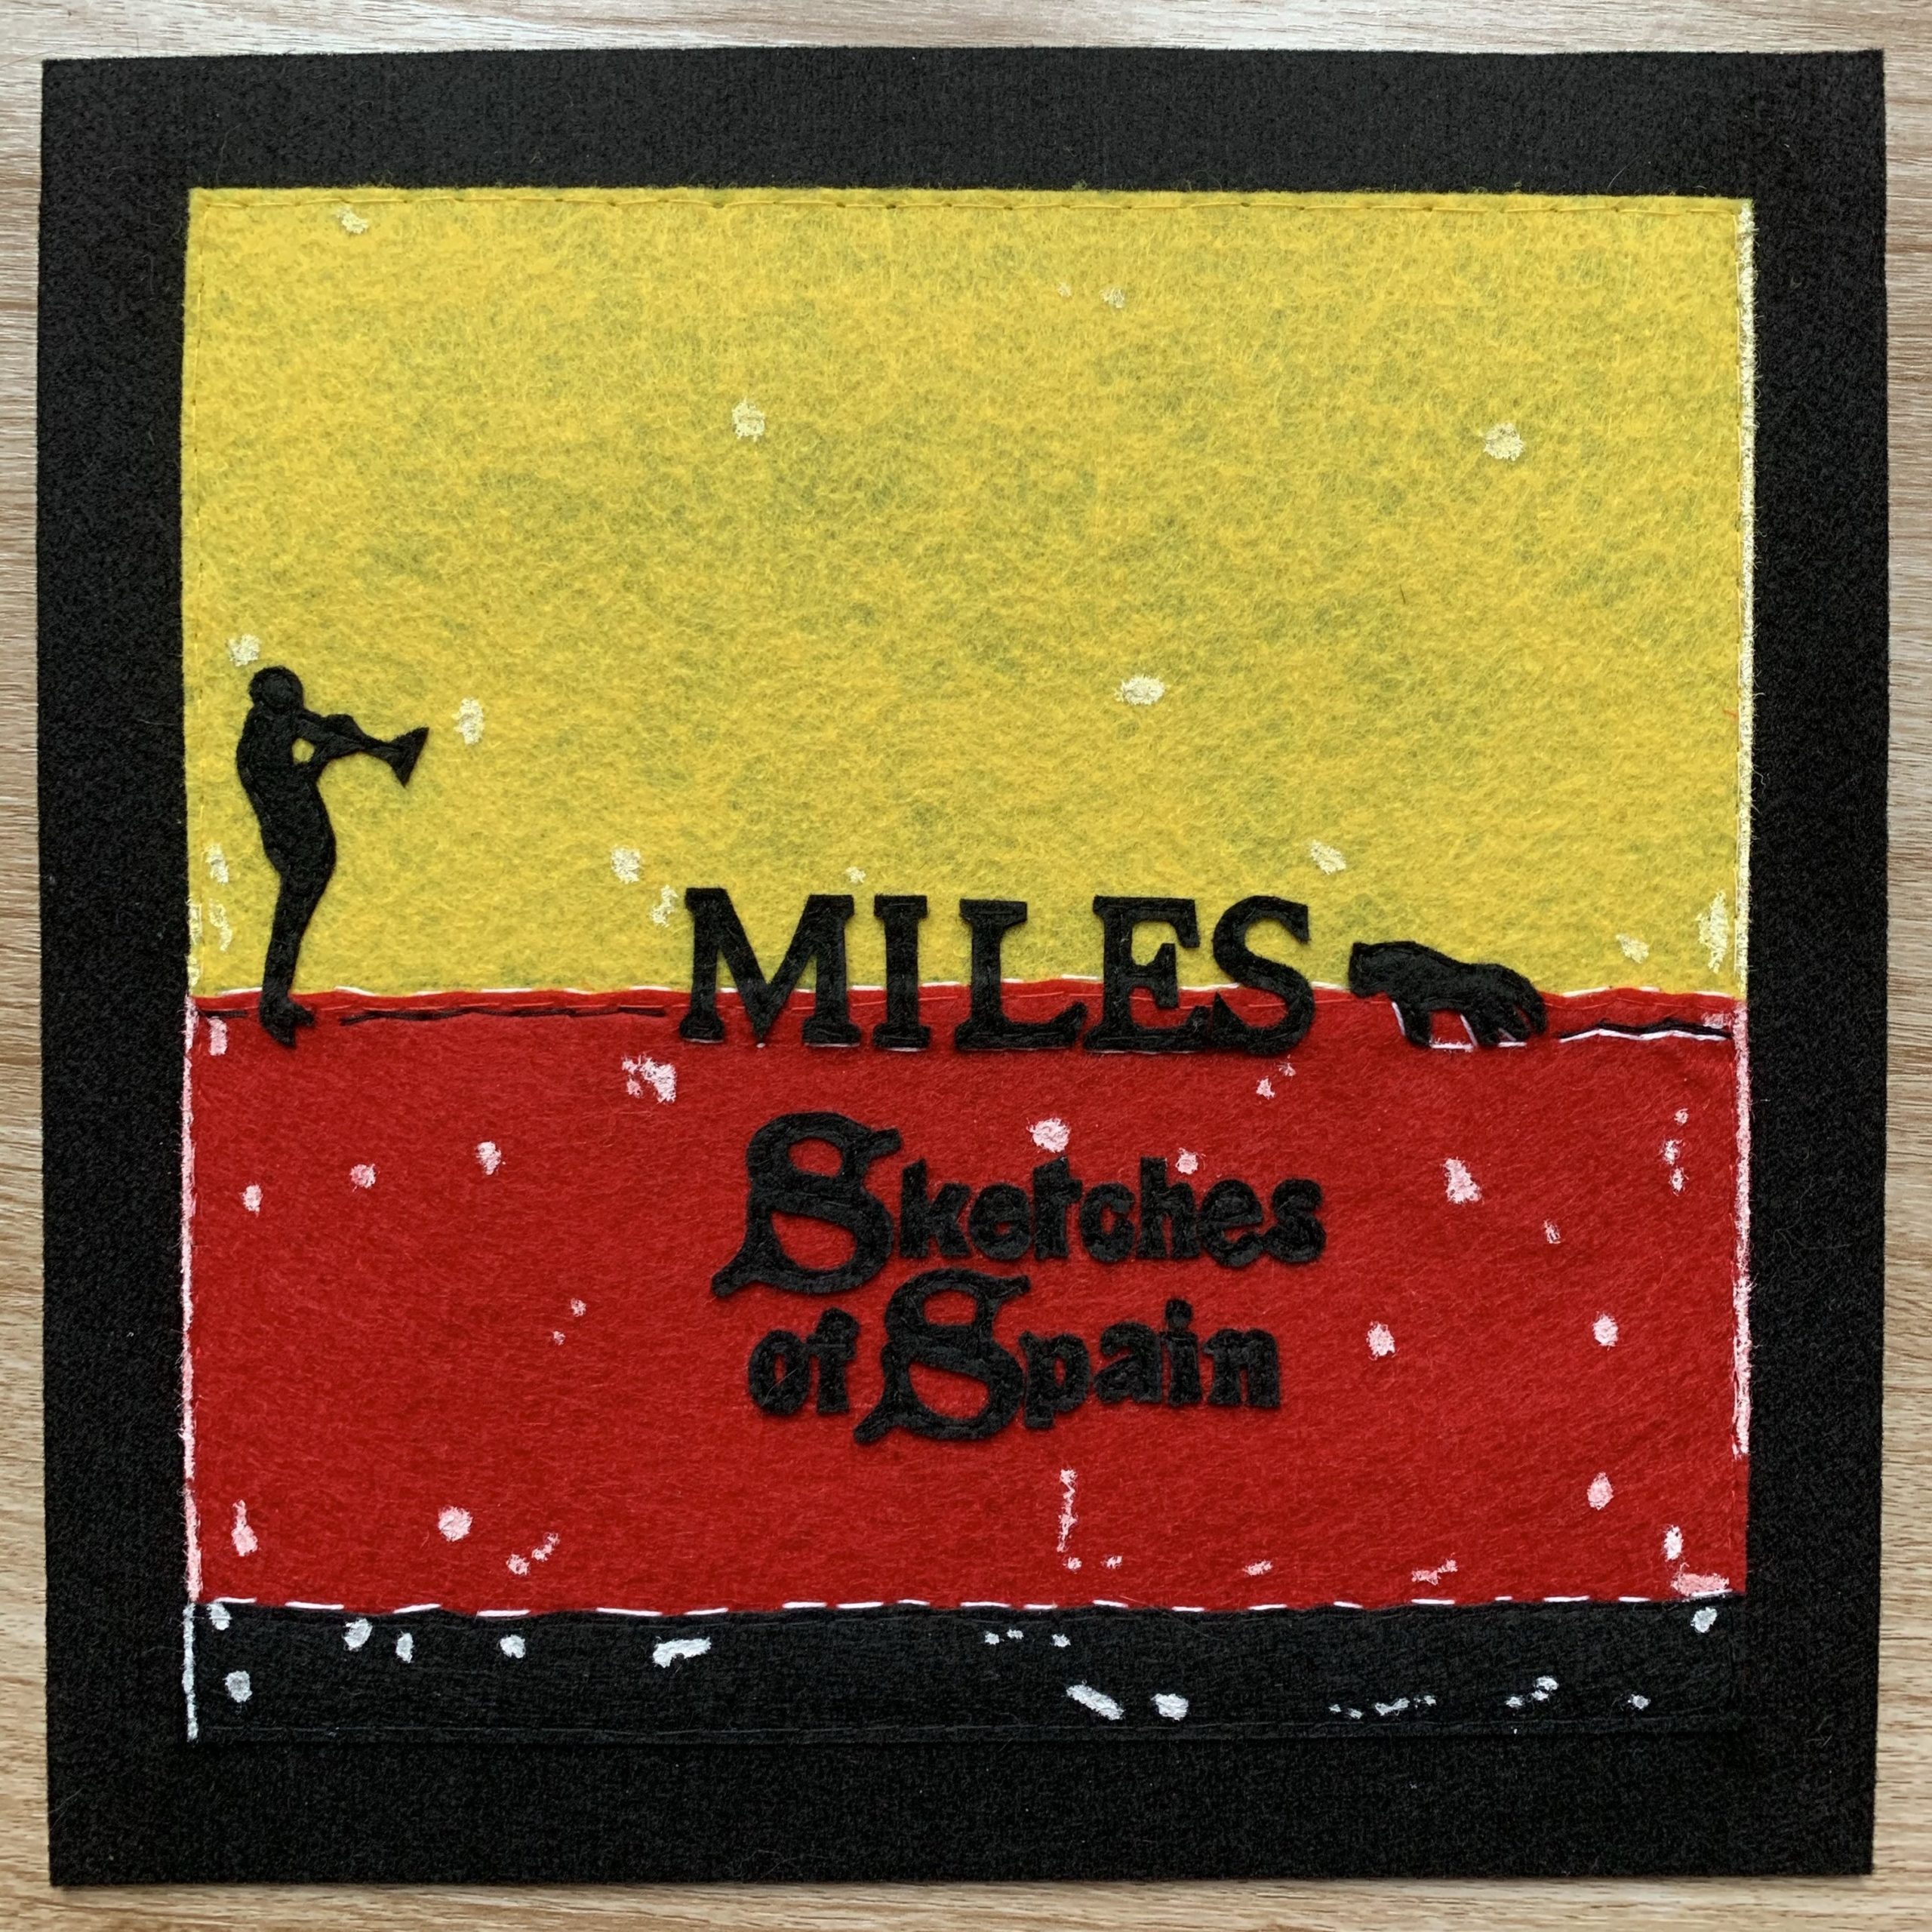 Miles Davis – Sketches of Spain (1960)